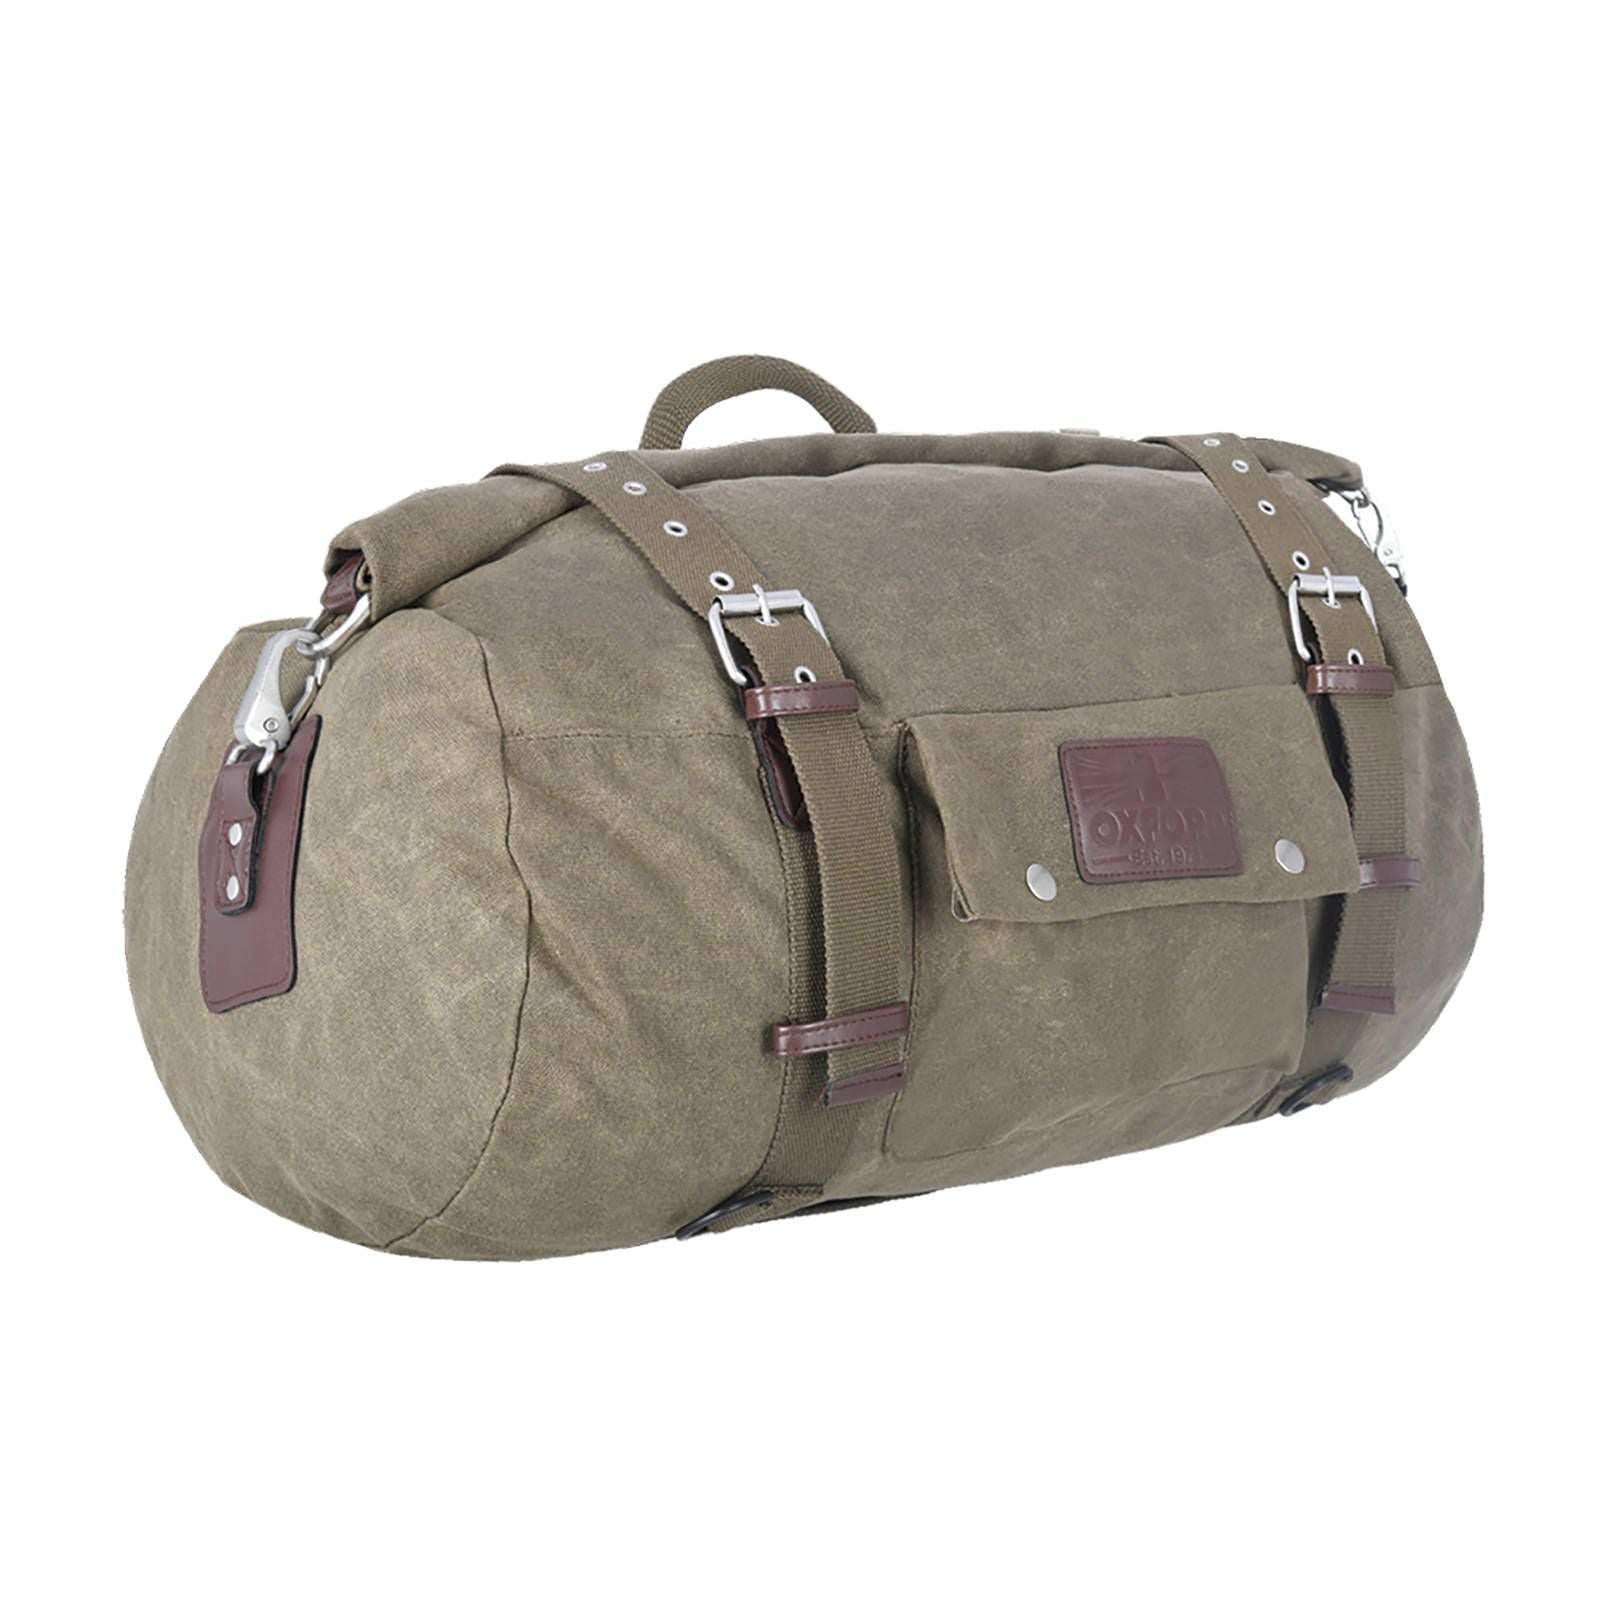 New OXFORD Heritage Roll Bag 30L - Khaki #OXOL577